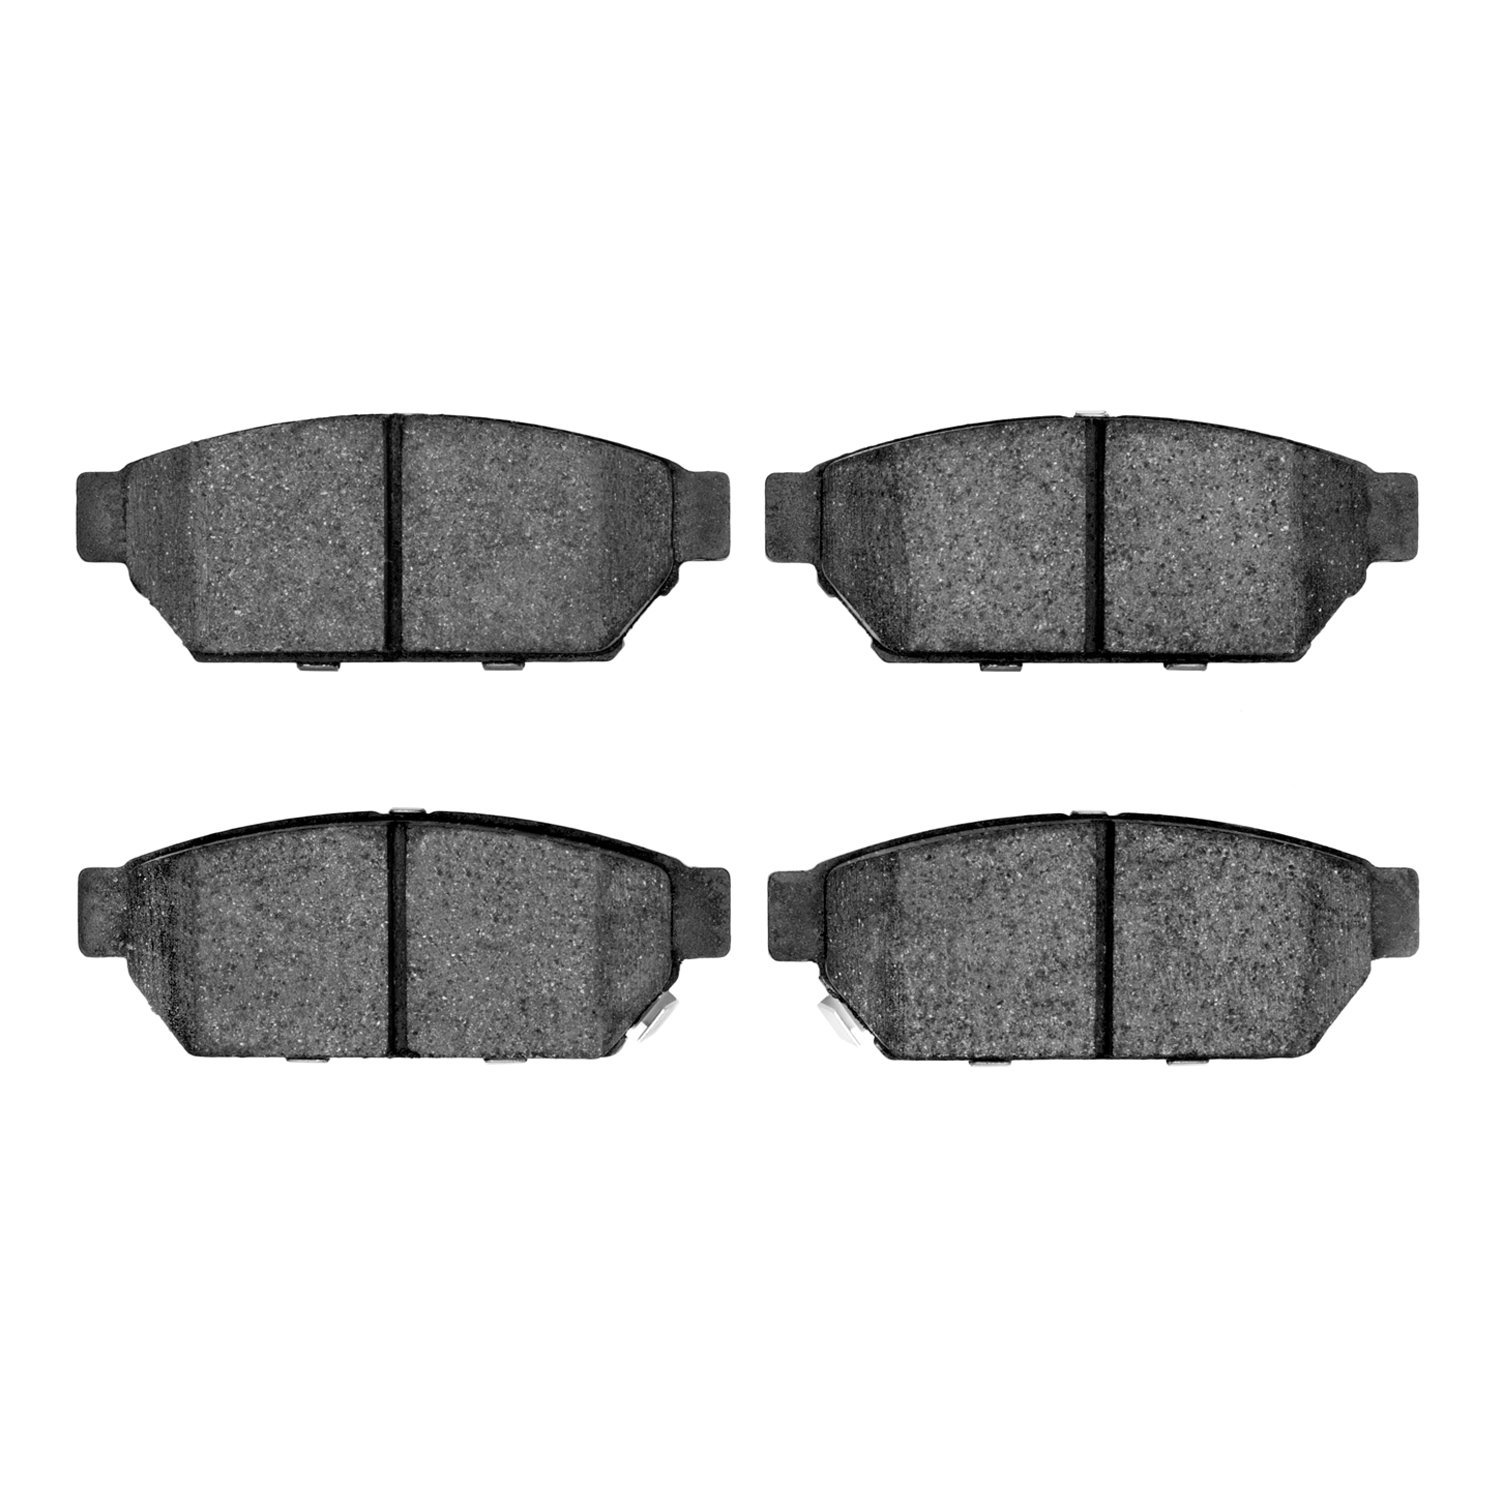 1310-0596-00 3000-Series Ceramic Brake Pads, 1992-1996 Multiple Makes/Models, Position: Rear